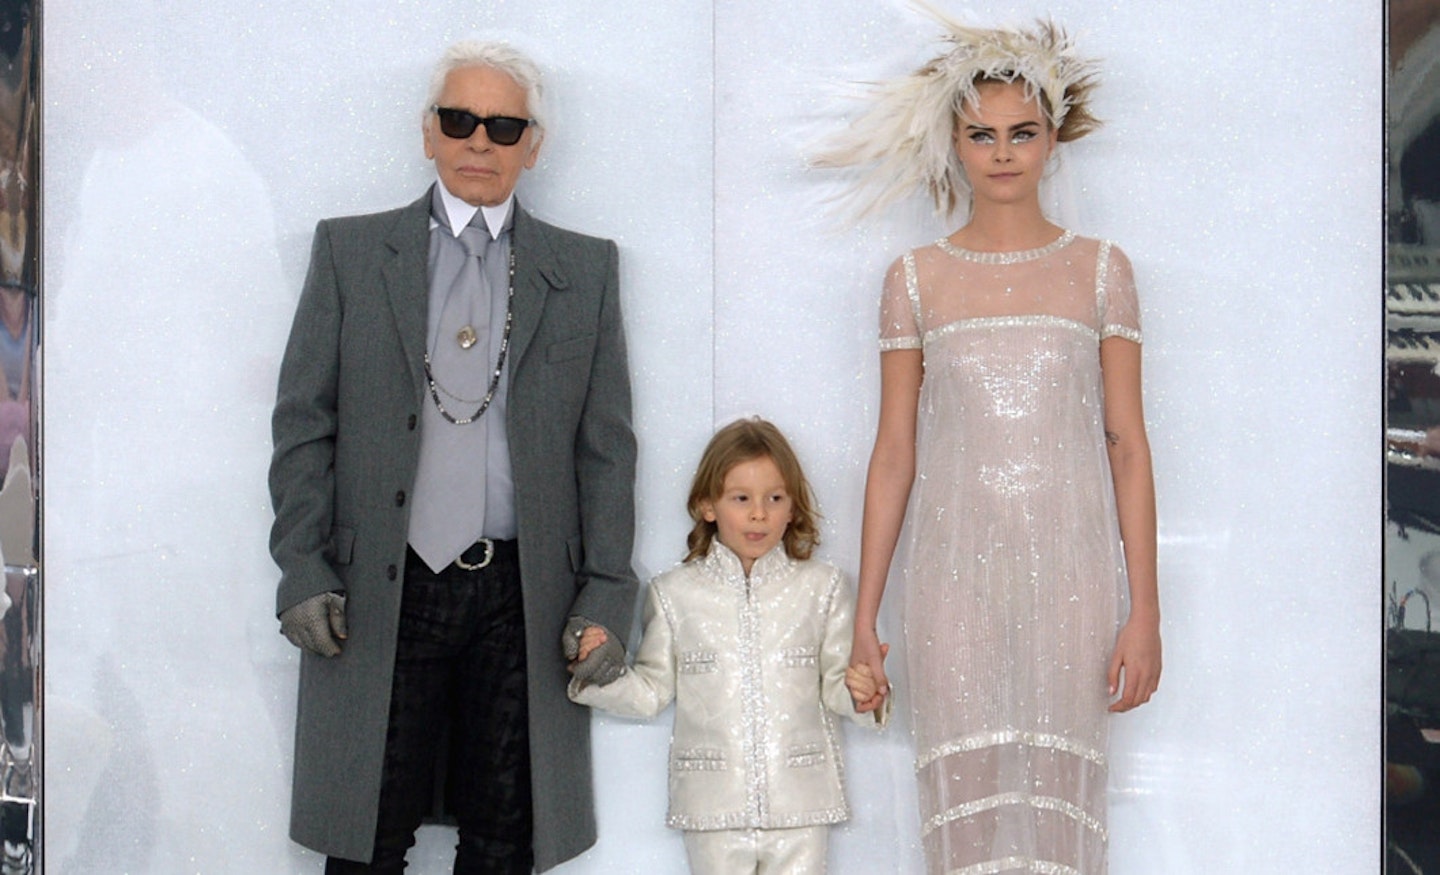 Karl Lagerfeld Unveils Spring/Summer 2020 Menswear Lookbook